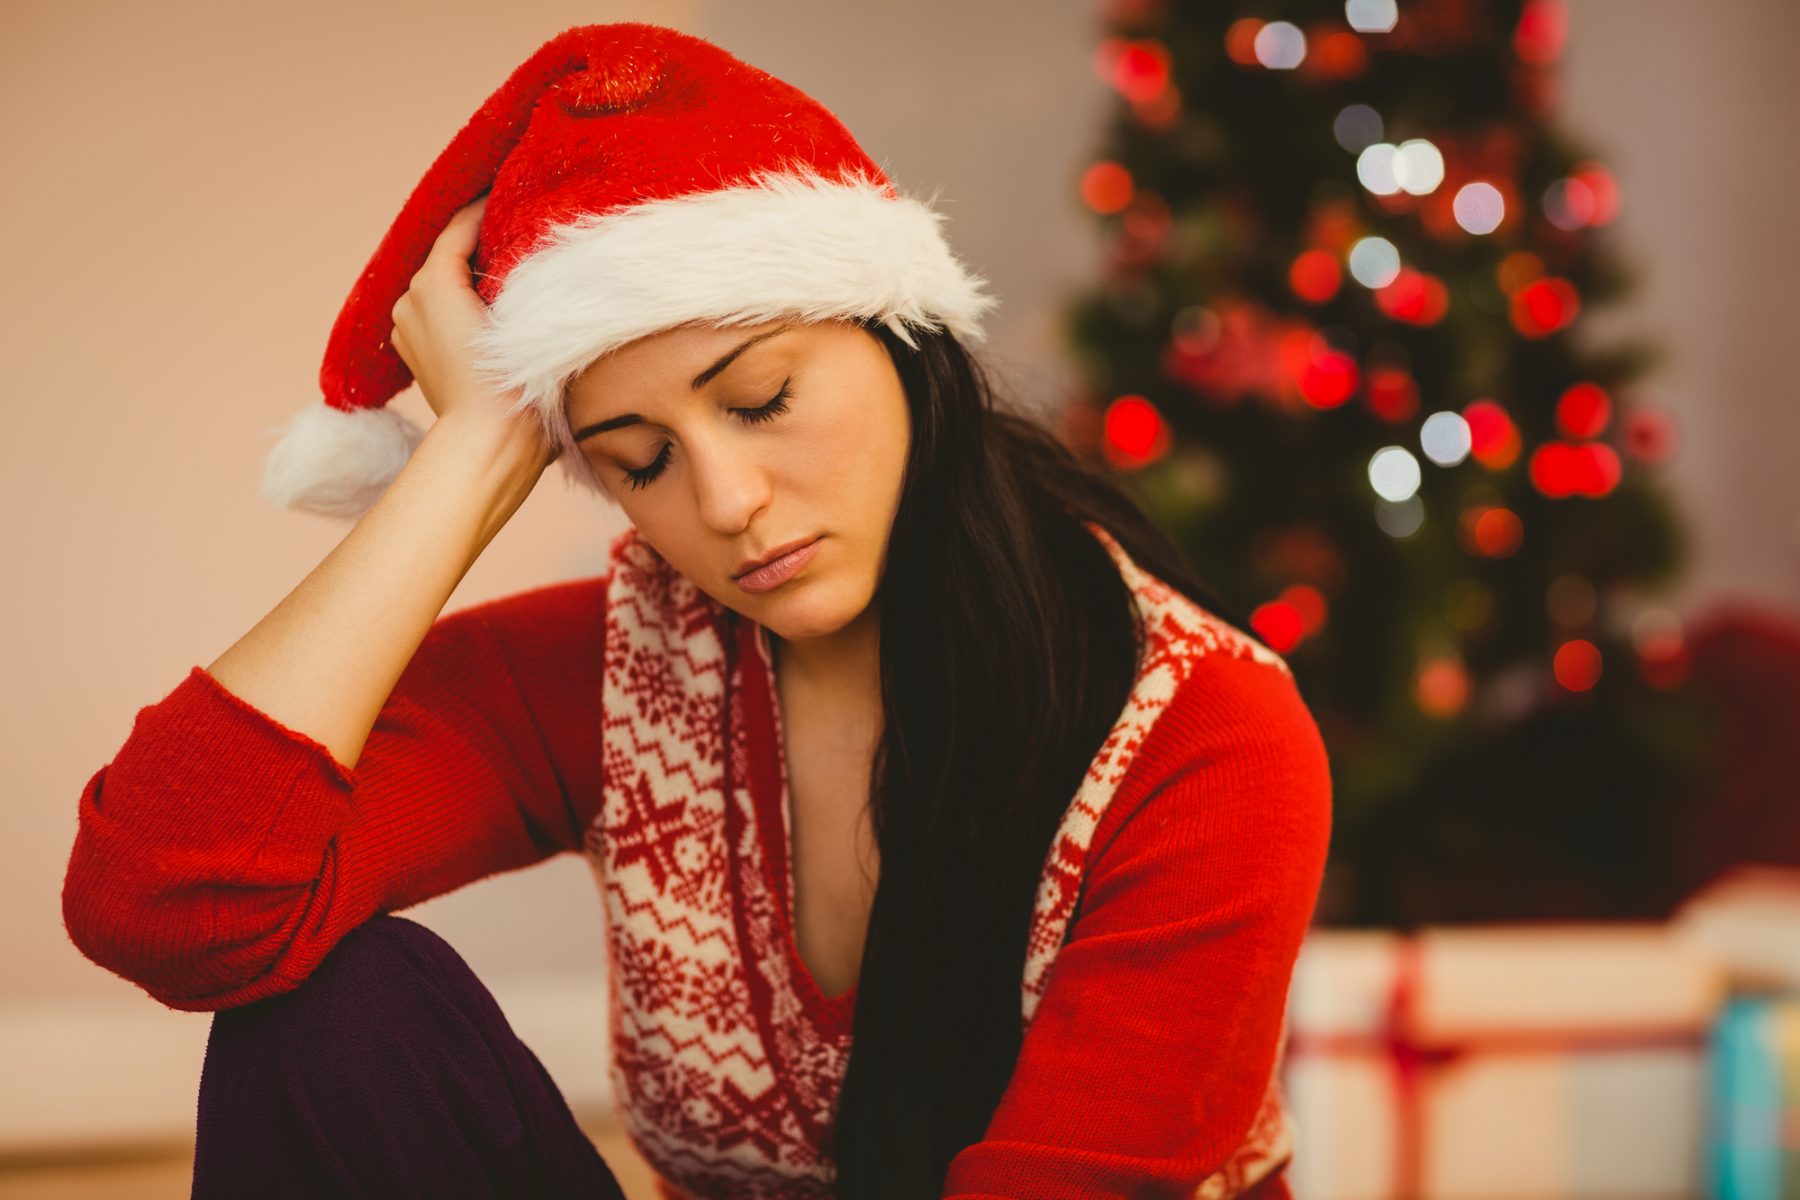 Blue Christmas???? Seasonal Affective Disorder/Holiday Blues/Depression